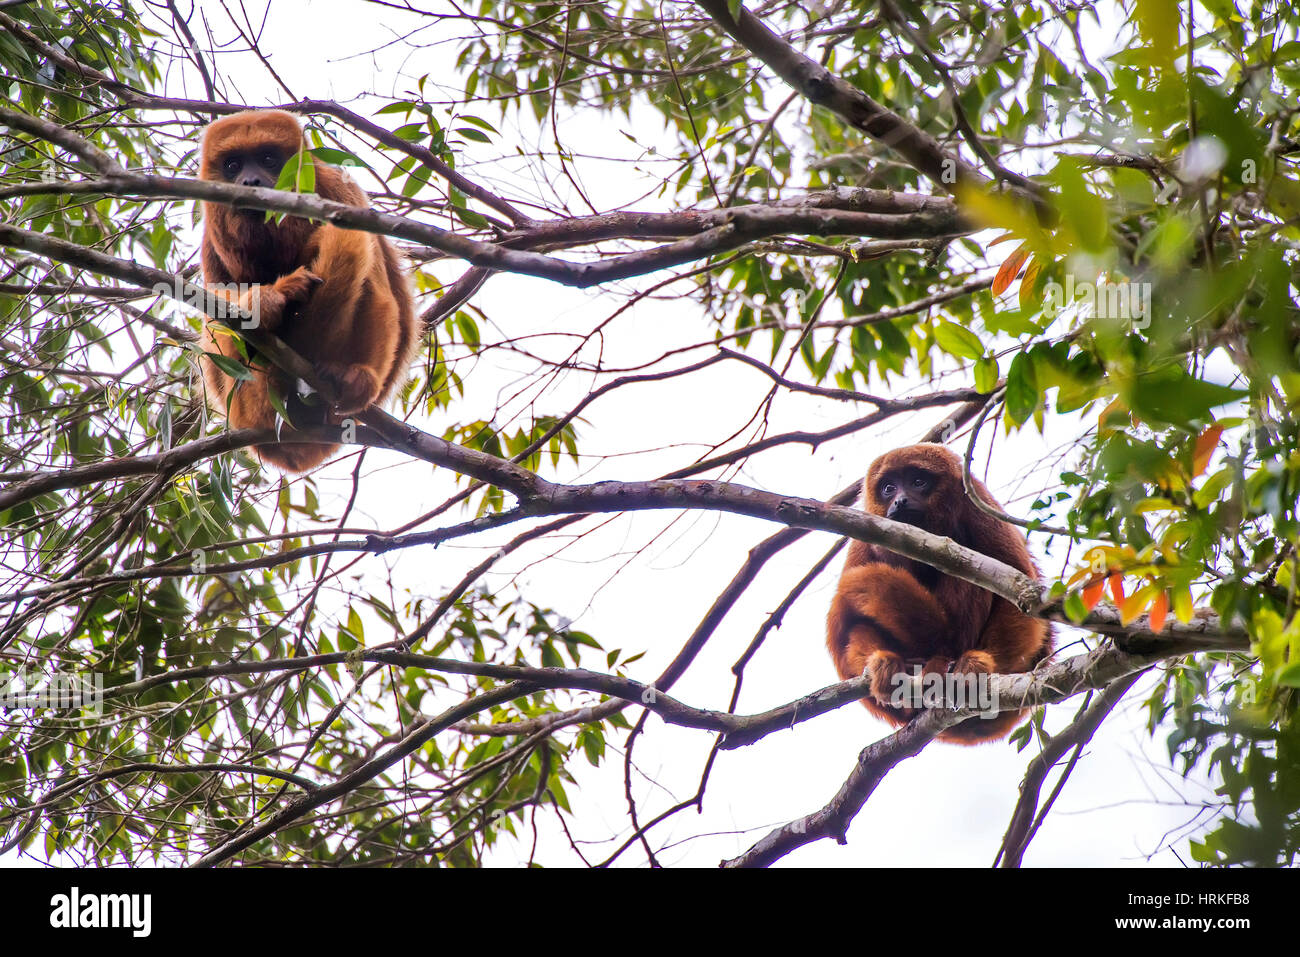 Brown howler monkey (Alouatta guariba), photographed in Afonso Cláudio, Espírito Santo - Brazil. Atlantic forest Biome. Wild animal. Stock Photo